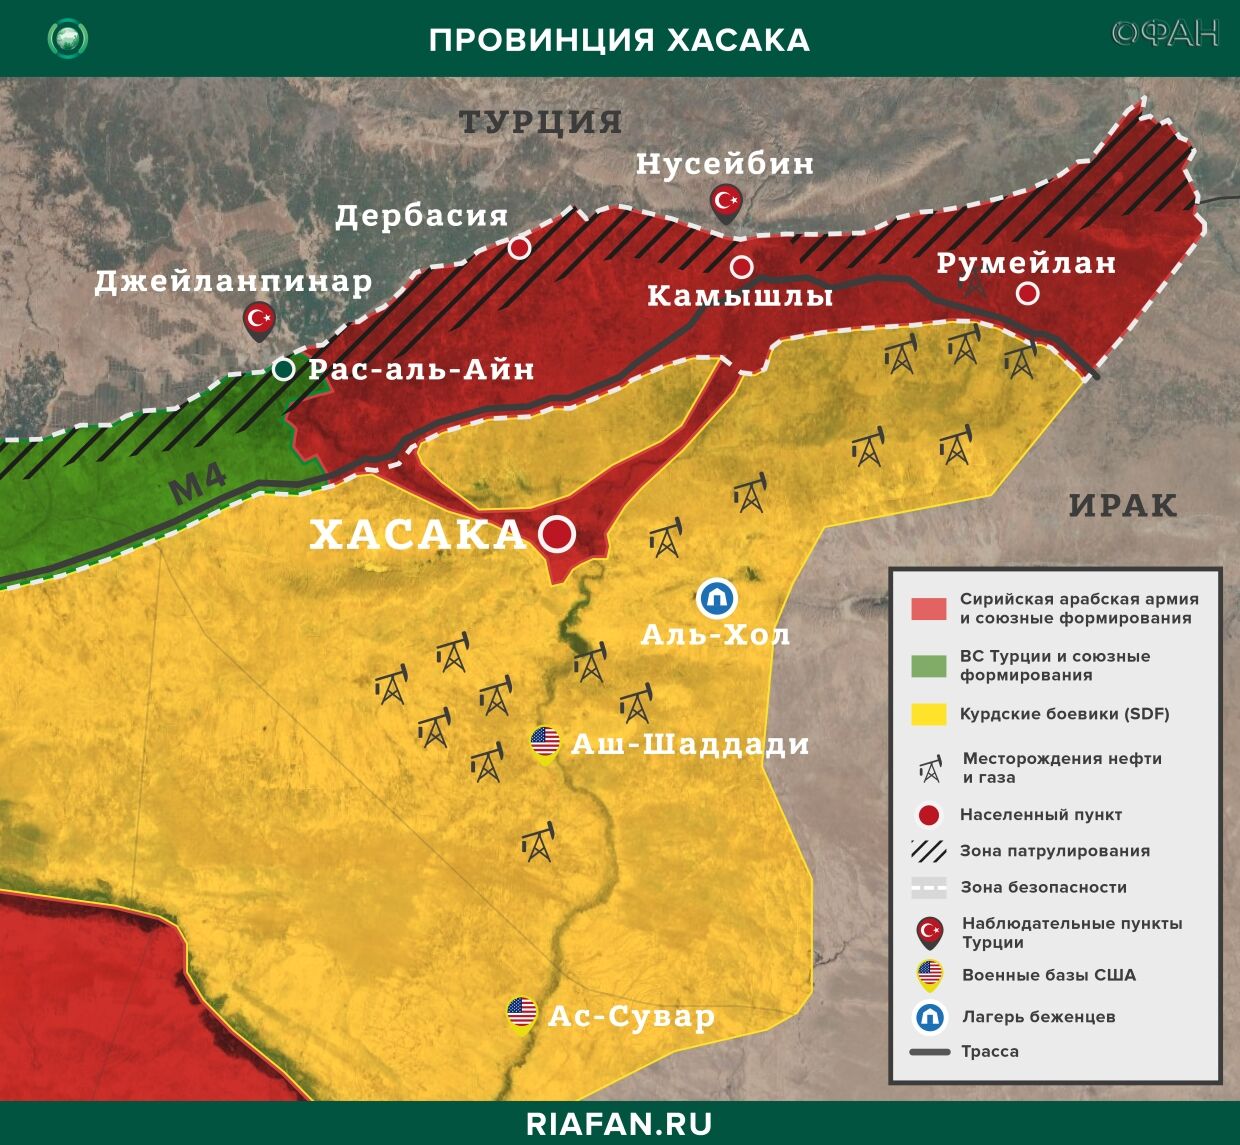 Nouvelles de Syrie 29 Avril 22.30: турецкие саперы обезвредили СВУ на севере САР, ИГ* заявило об убийстве солдата САА в Даръа